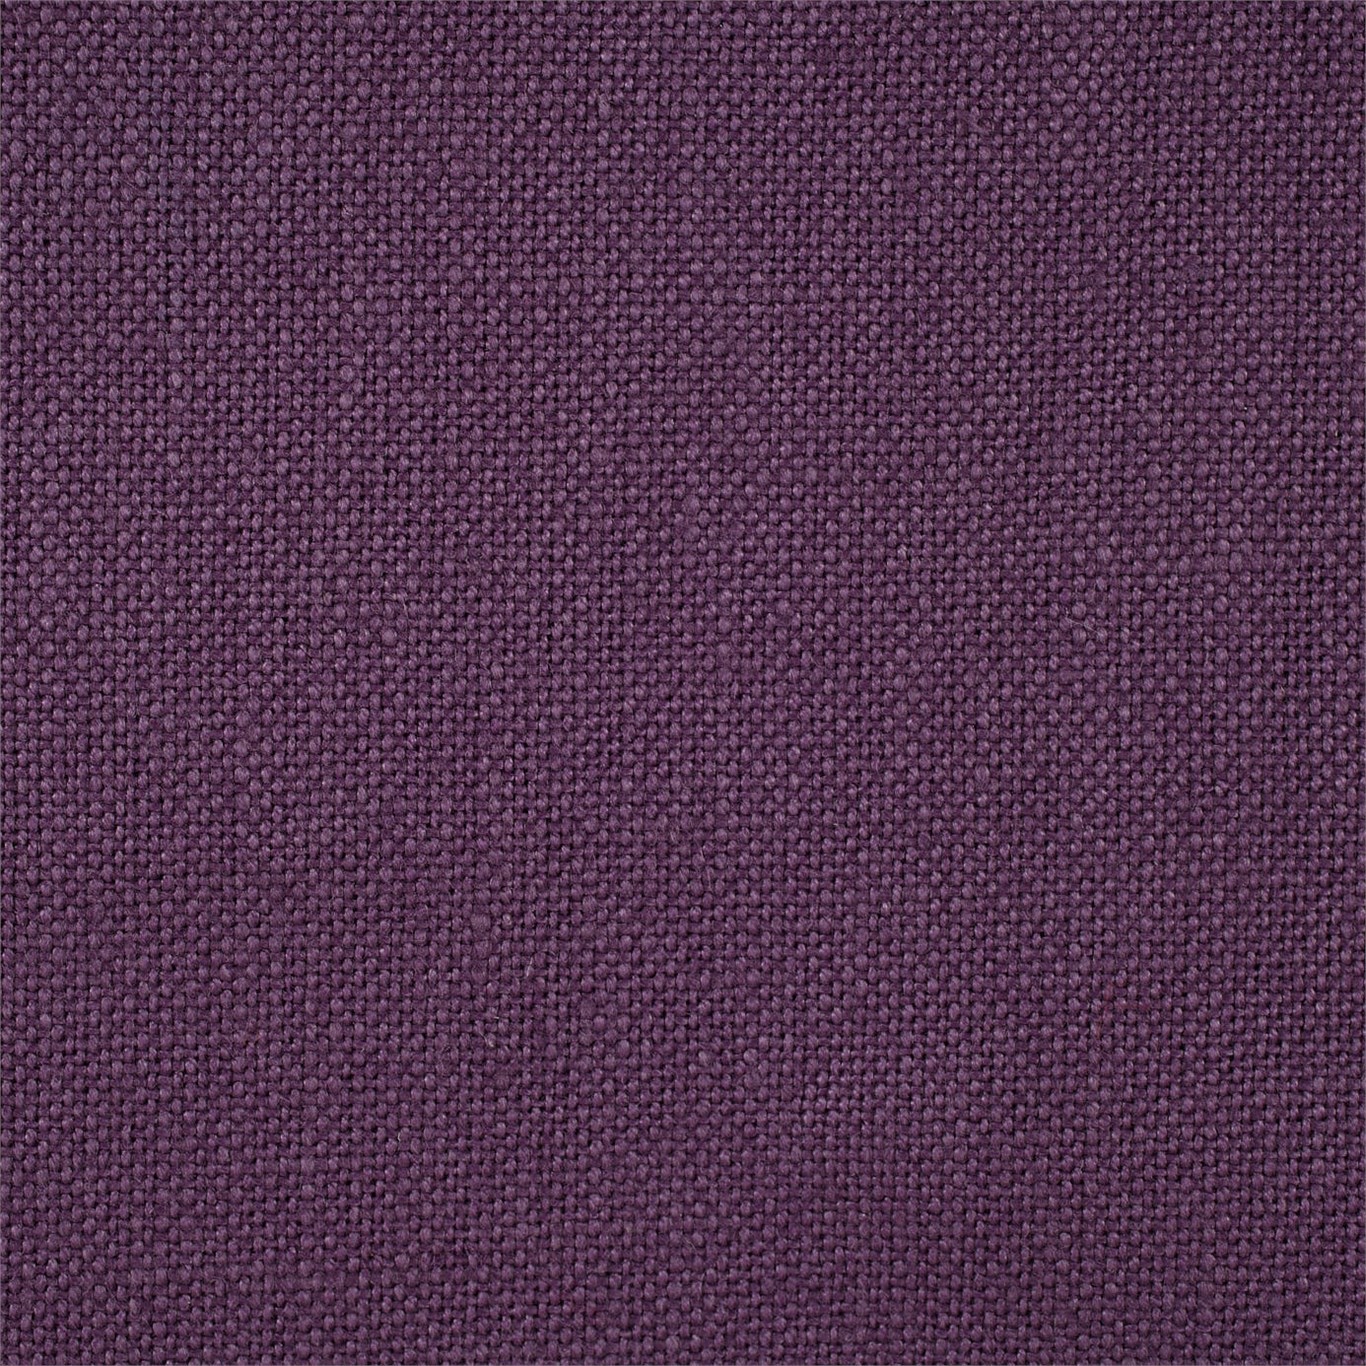 Malbec Grape Fabric by SAN